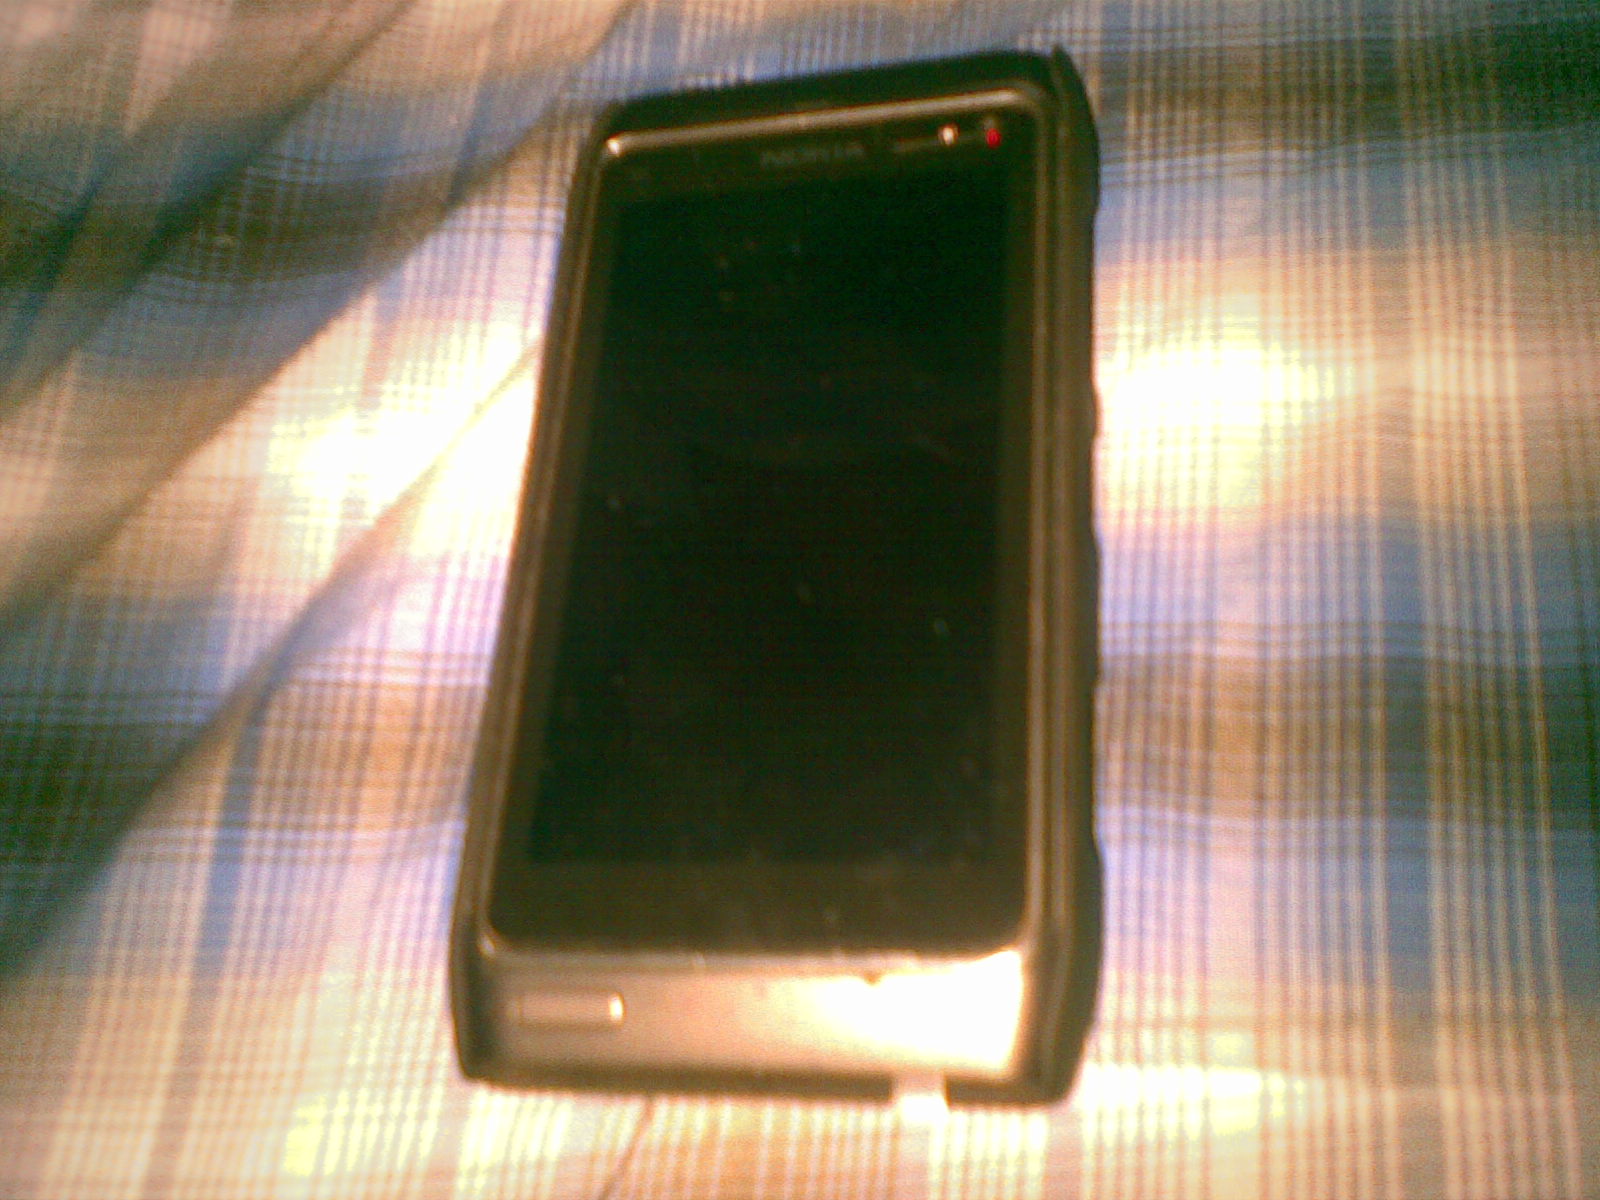 Nokia N8 large image 1